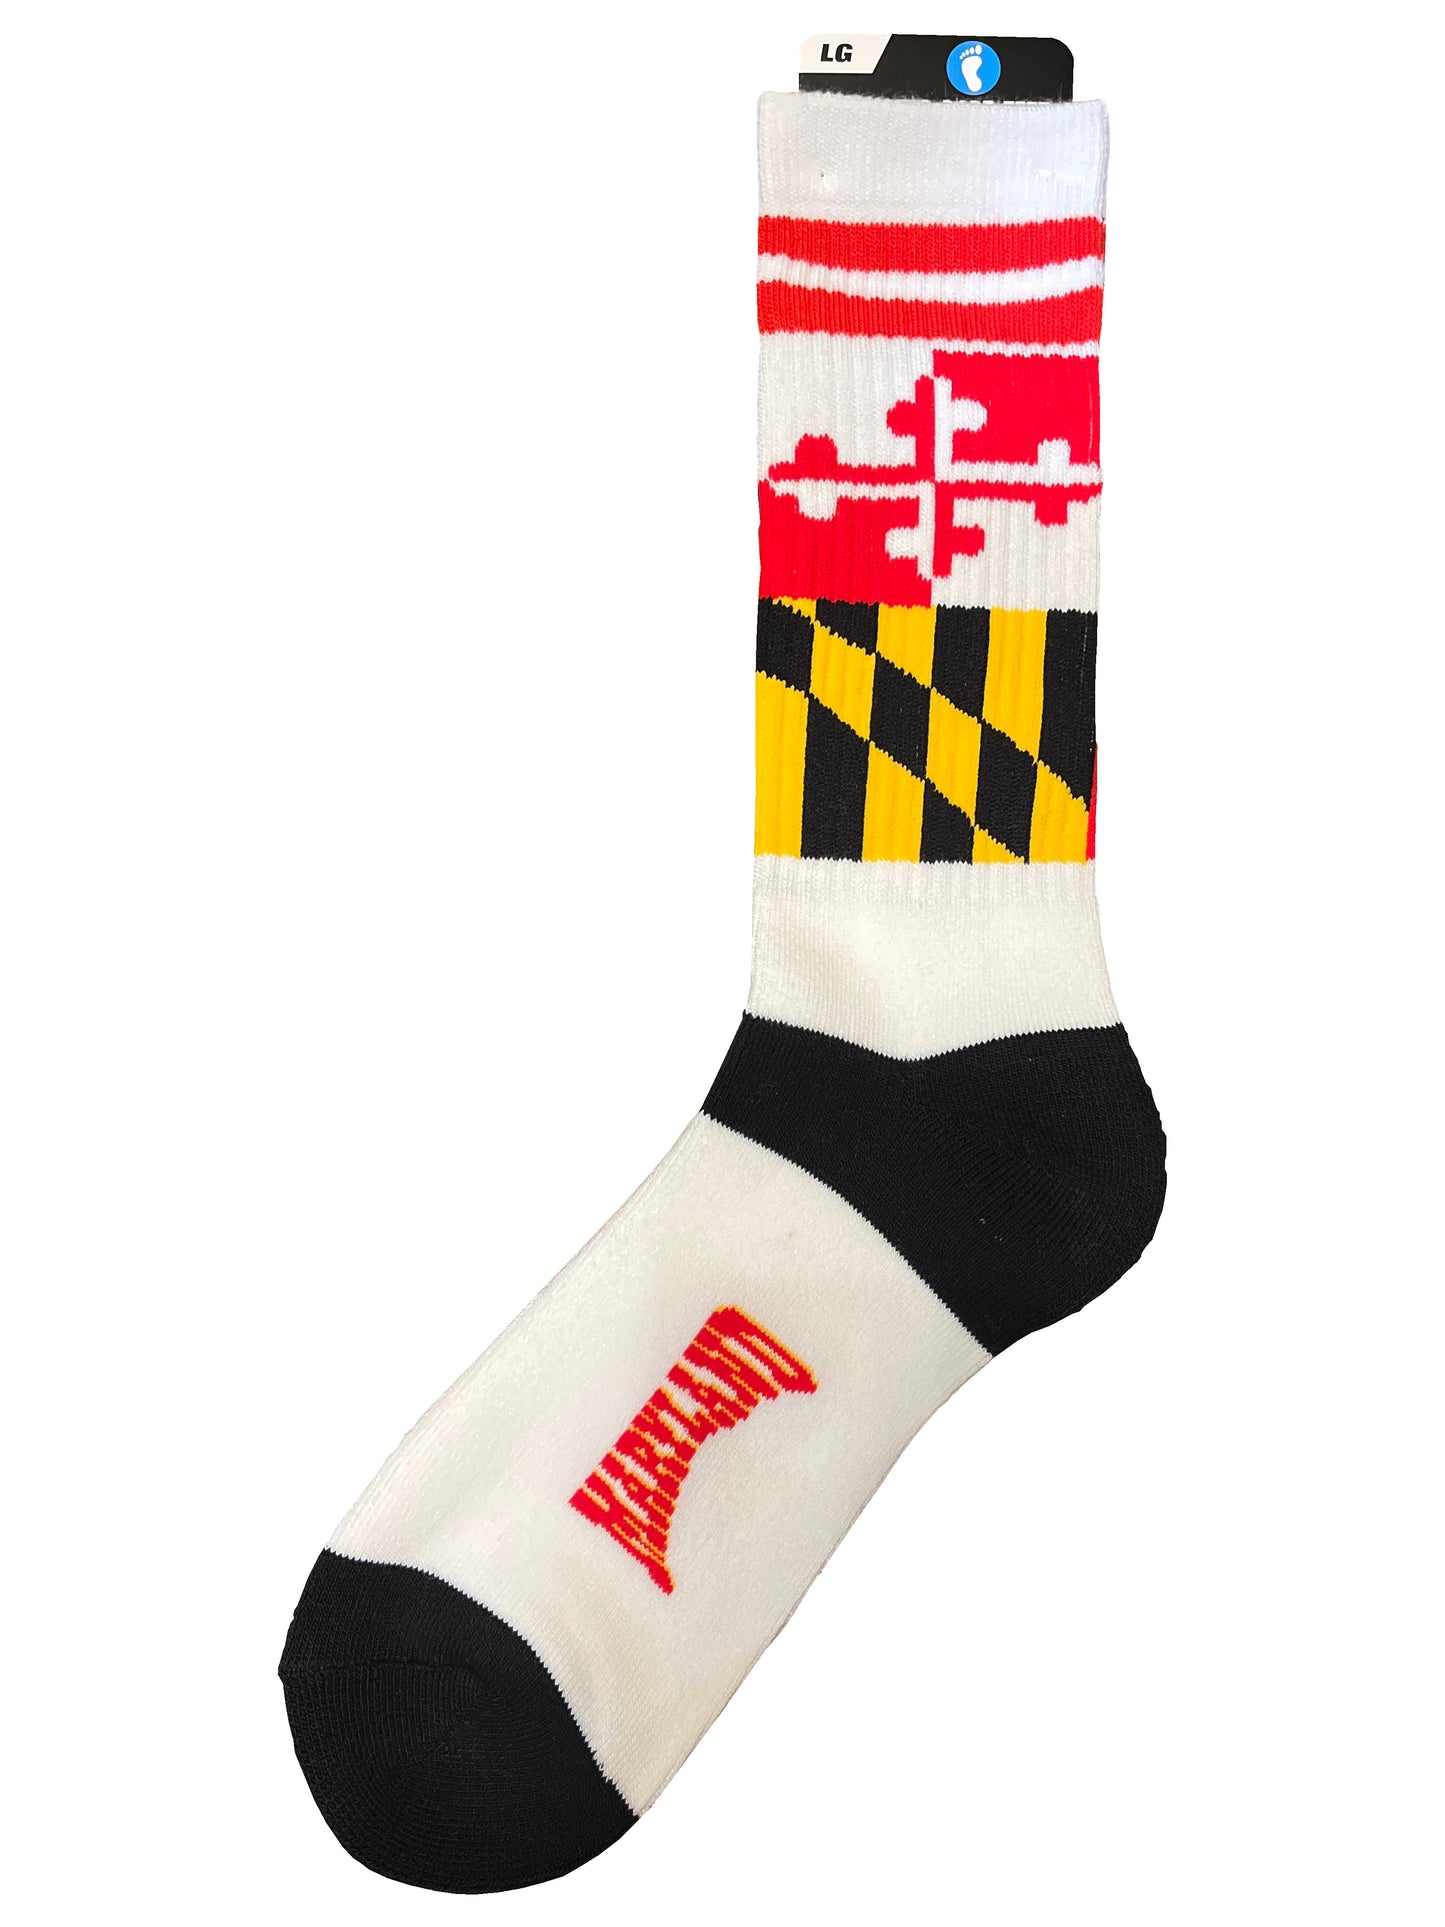 Maryland Flag Hybrid Socks